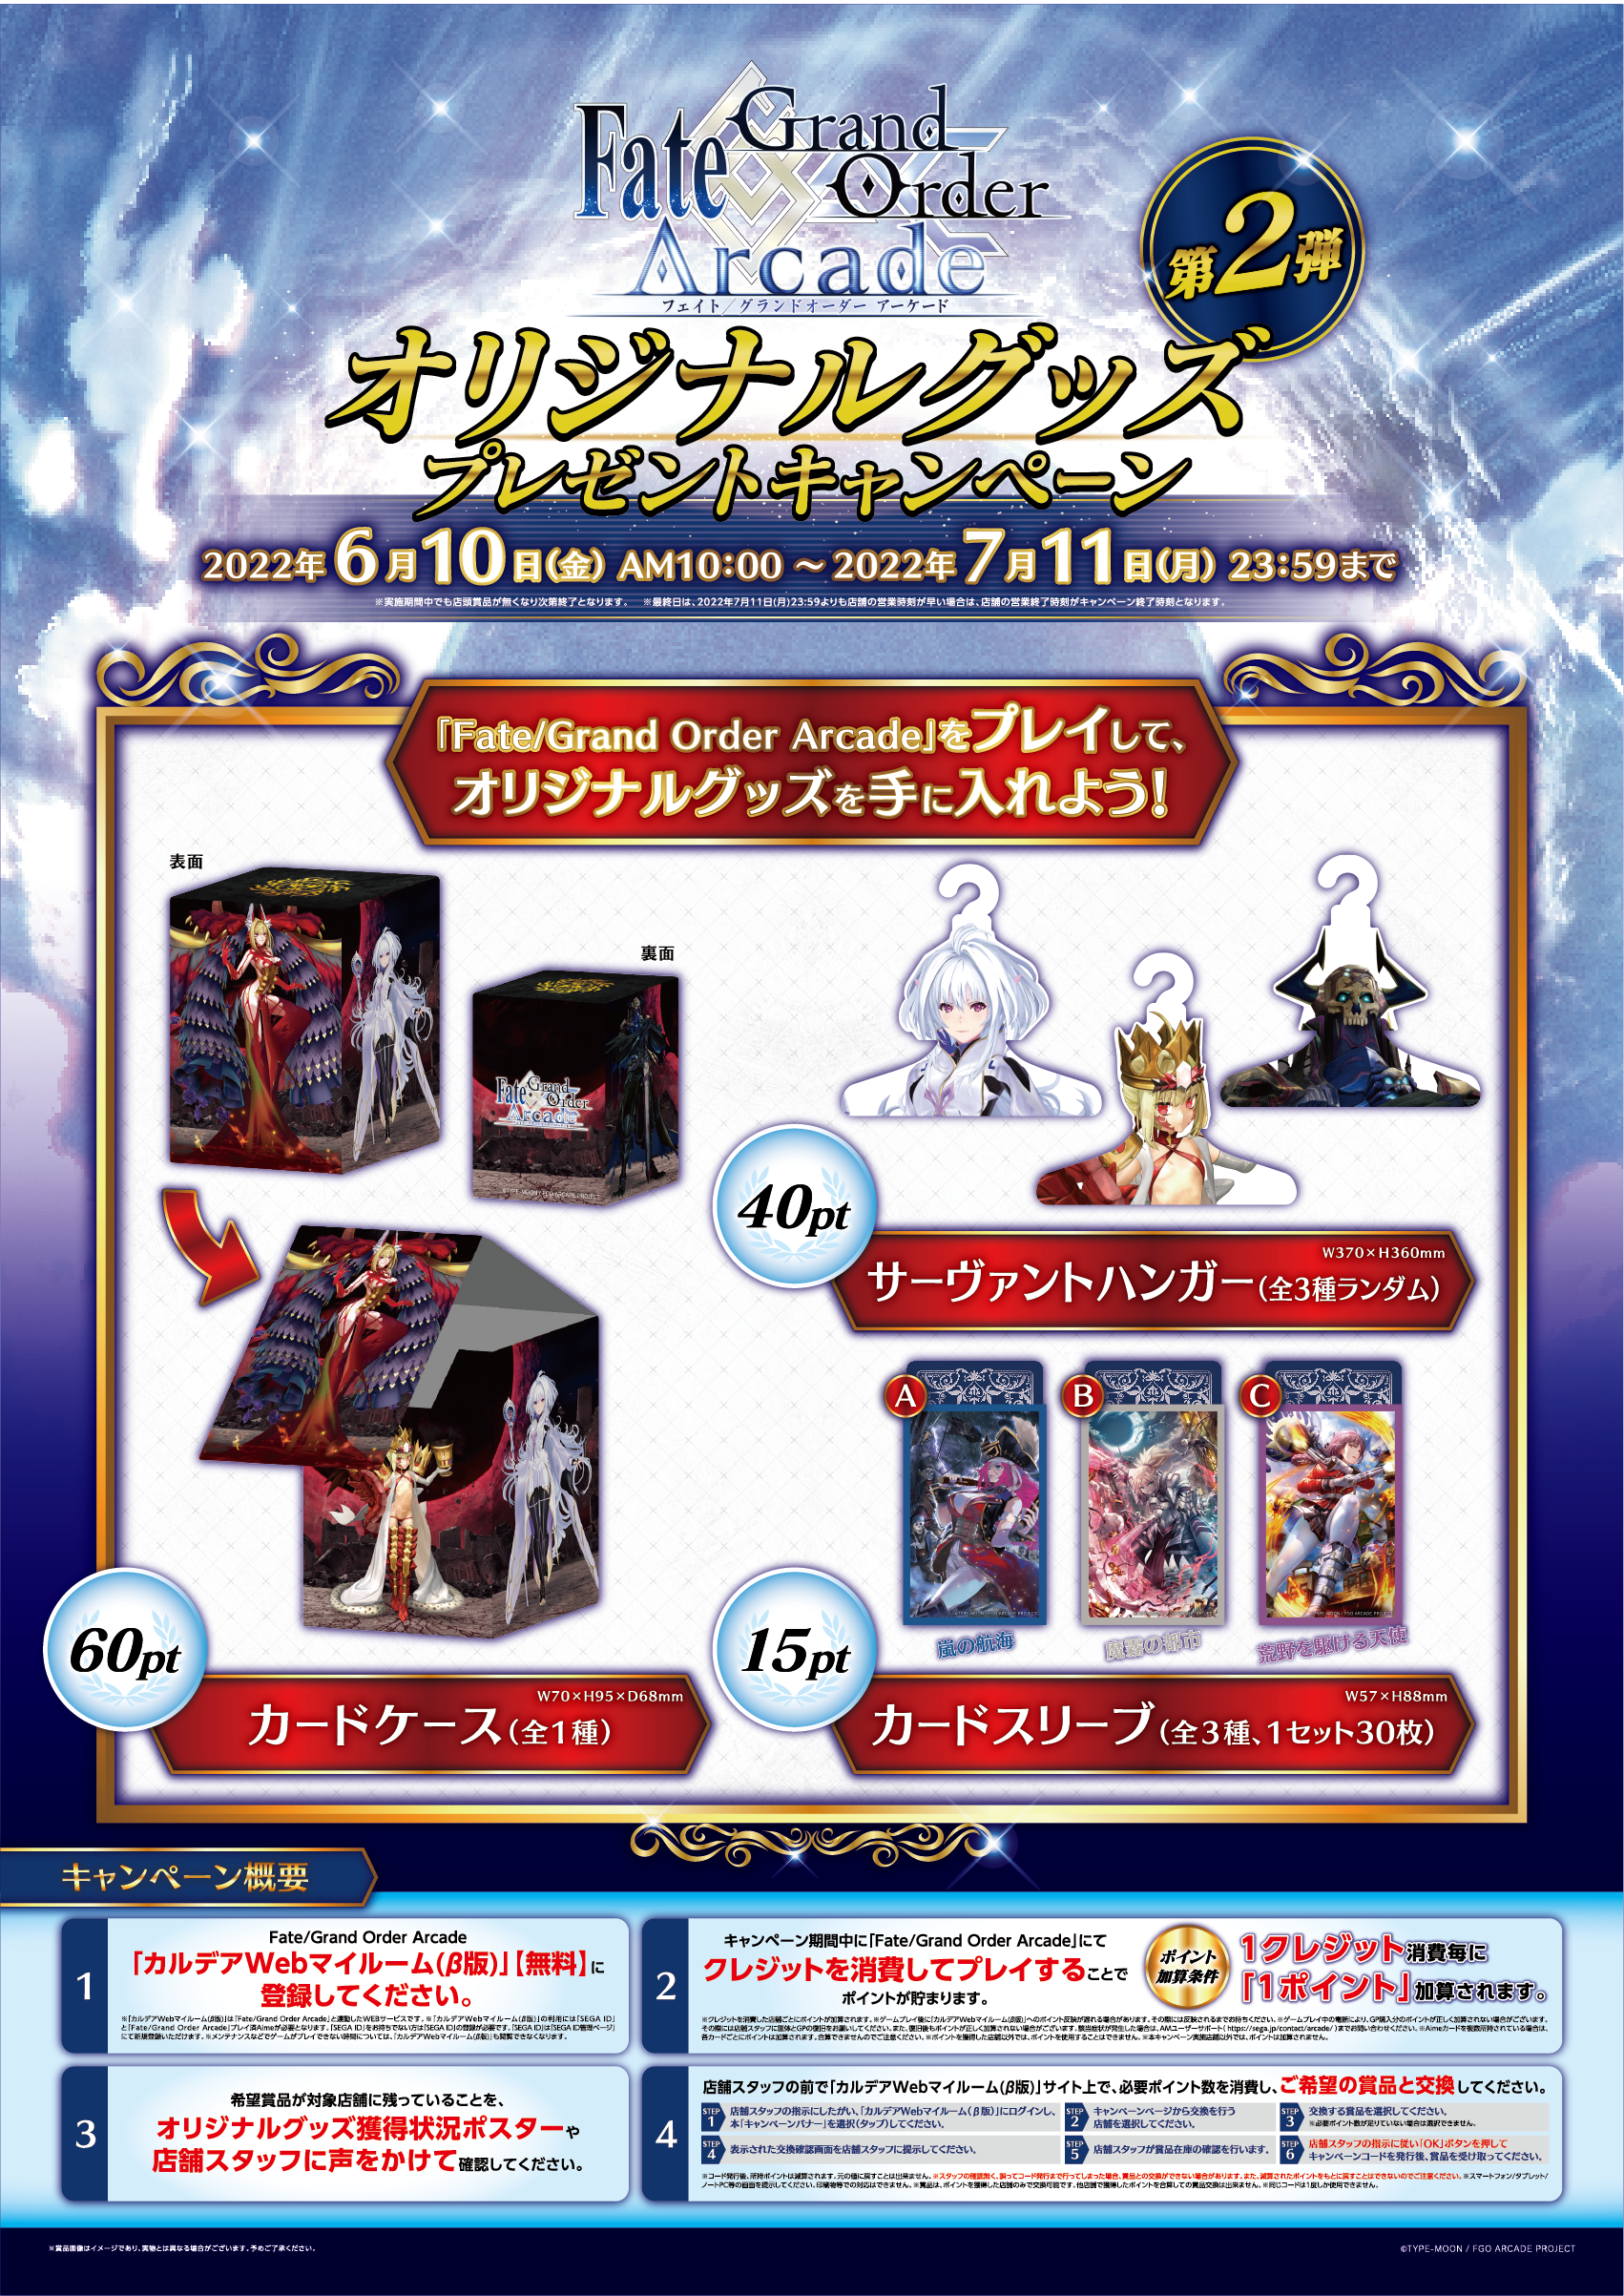 Fate/Grand Order Arcade オリジナルグッズプレゼントキャンペーン第2 